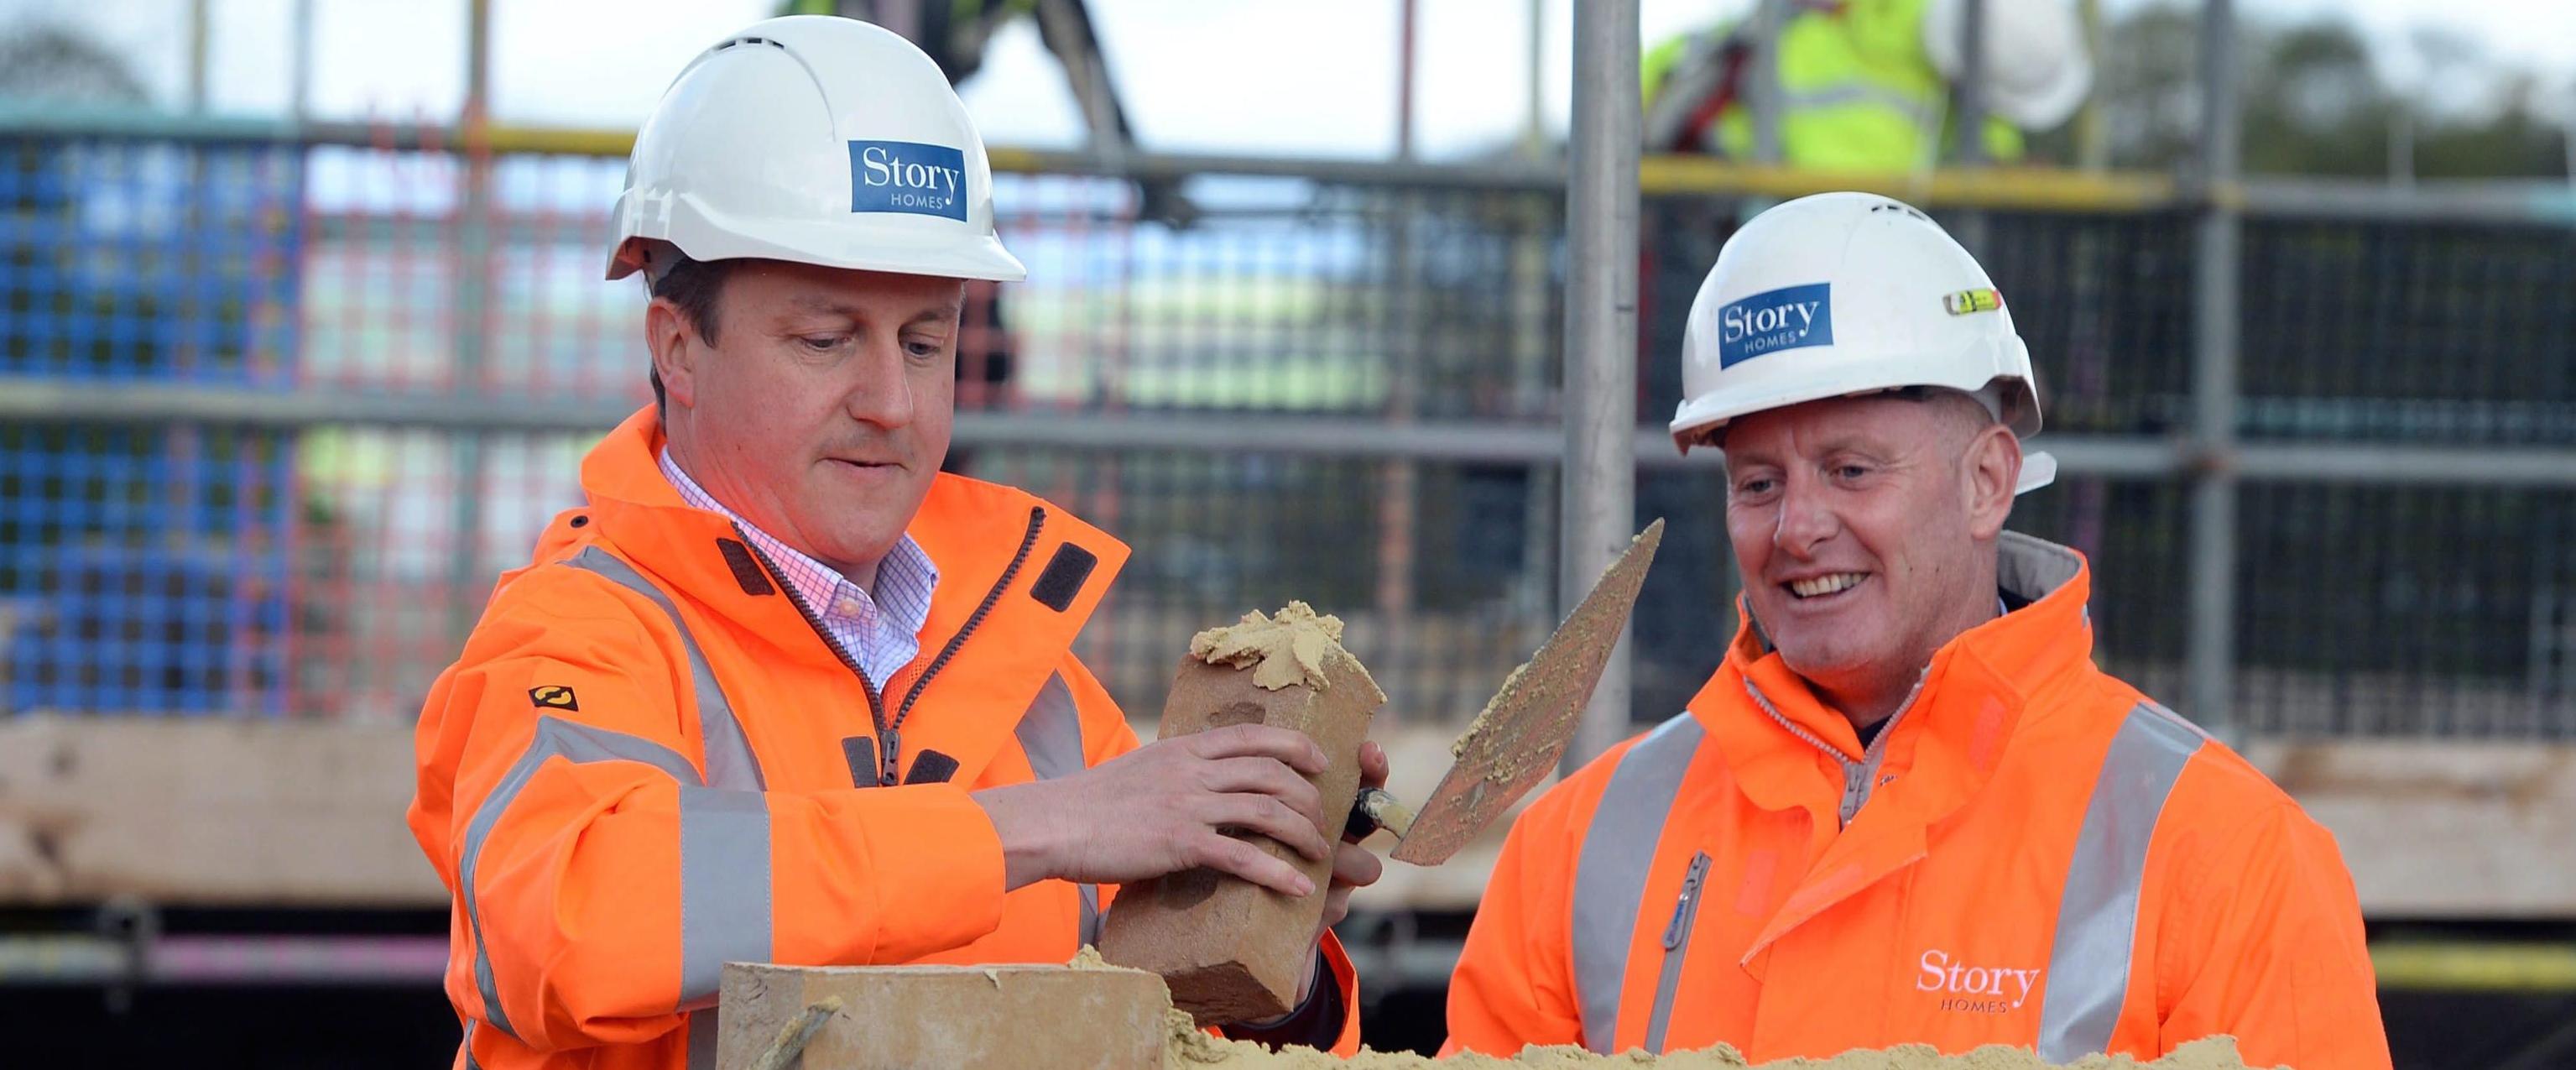 David Cameron in campagna elettorale